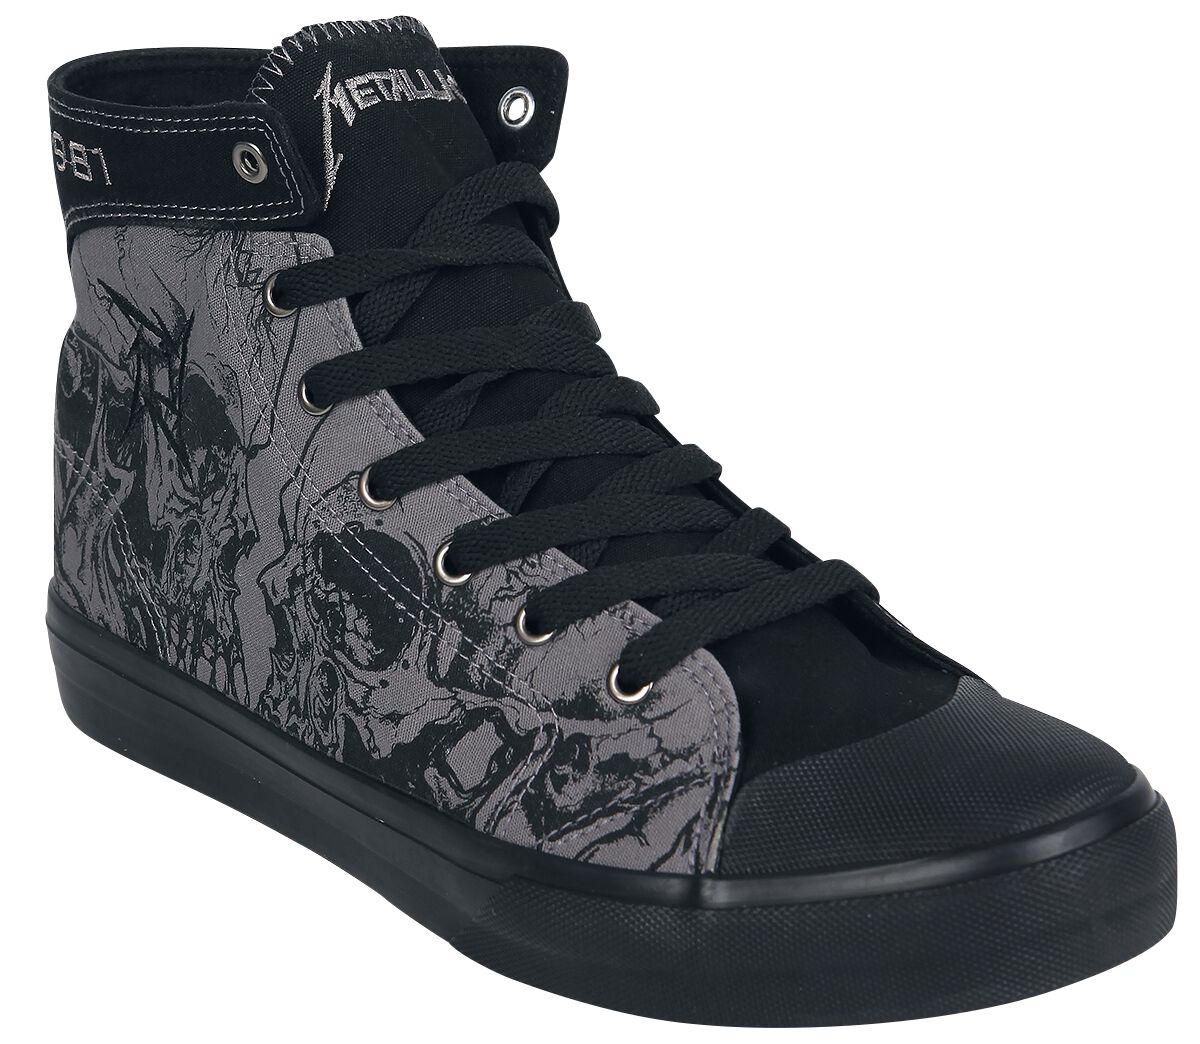 Metallica Sneaker high - EMP Signature Collection - EU37 bis EU47 - Größe EU39 - grau/schwarz  - EMP exklusives Merchandise!